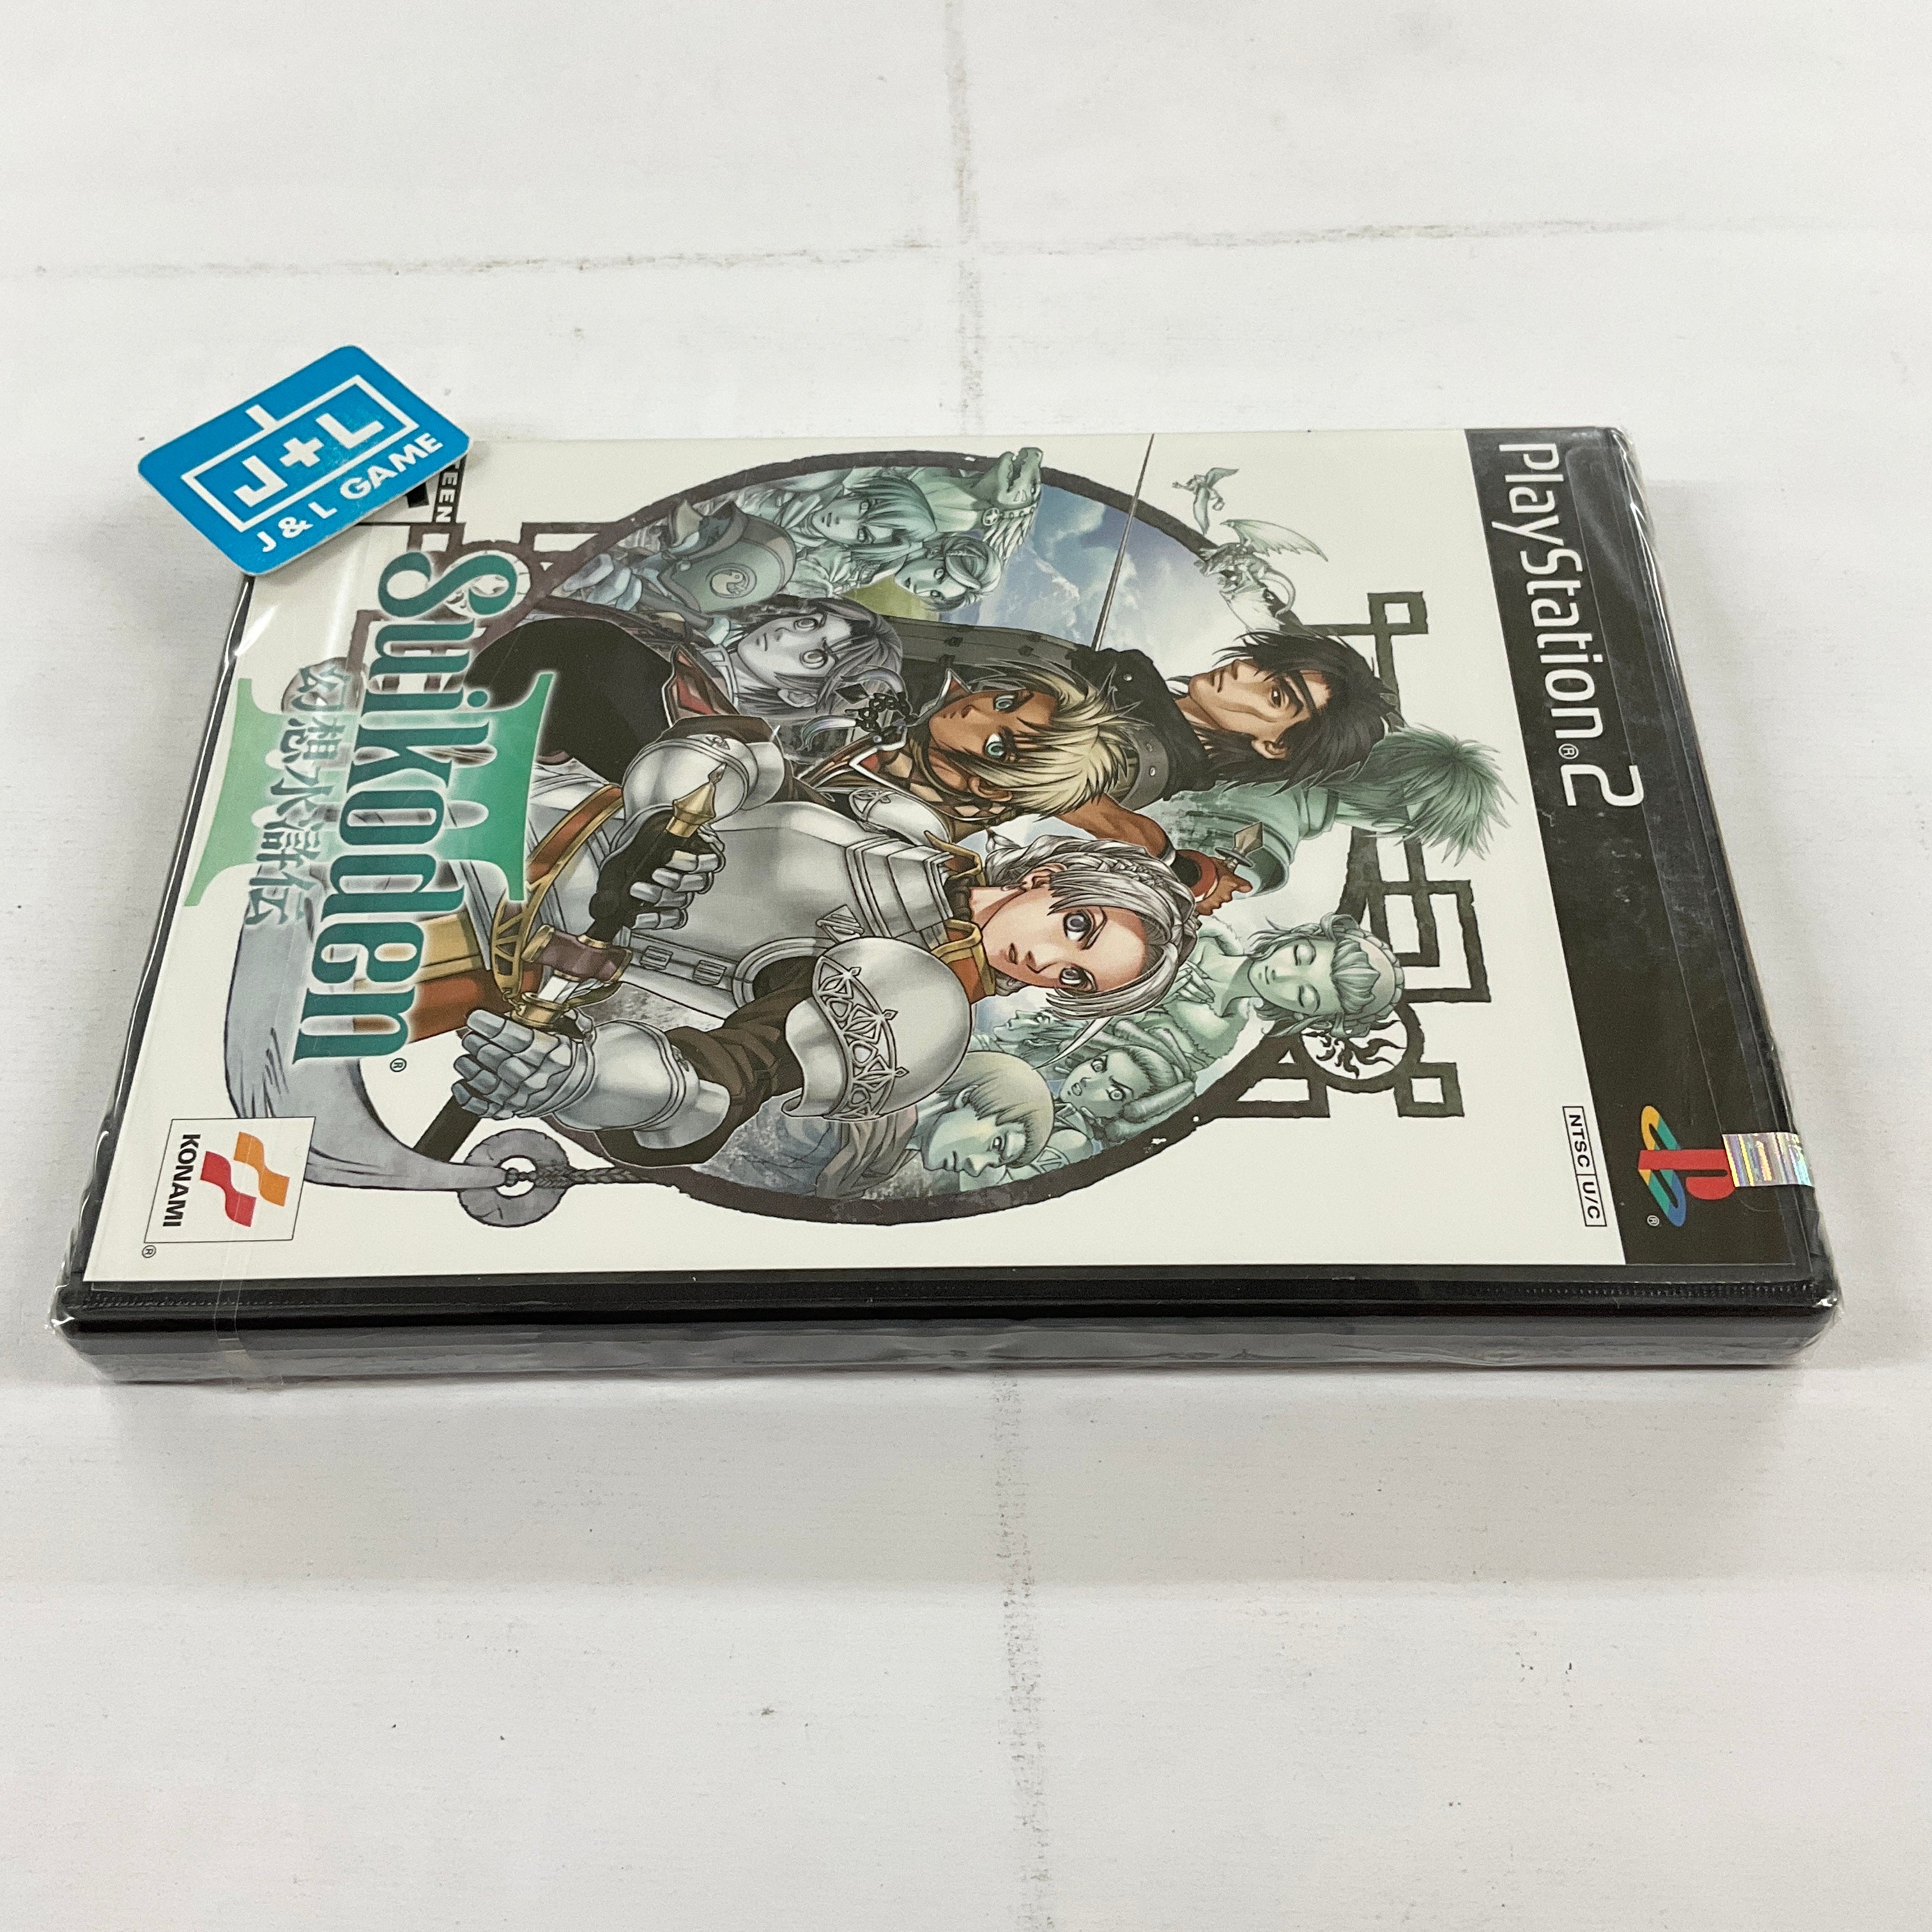 Suikoden III - (PS2) PlayStation 2 Video Games Konami   